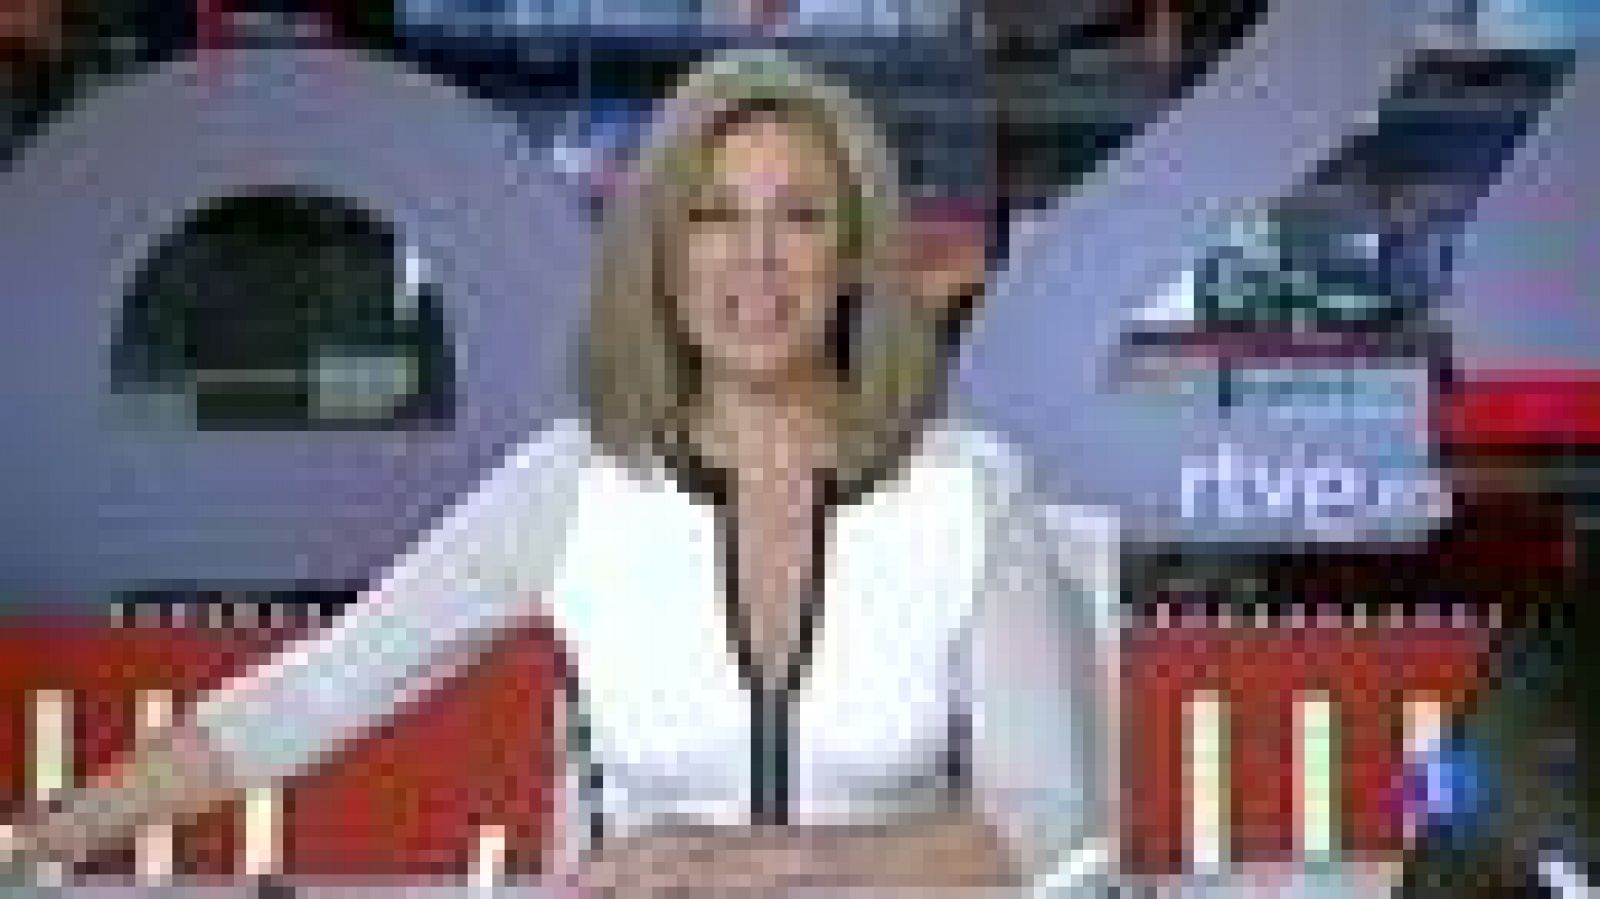 Telediario 1: Telediario Matinal en 4' - 14/07/12 | RTVE Play